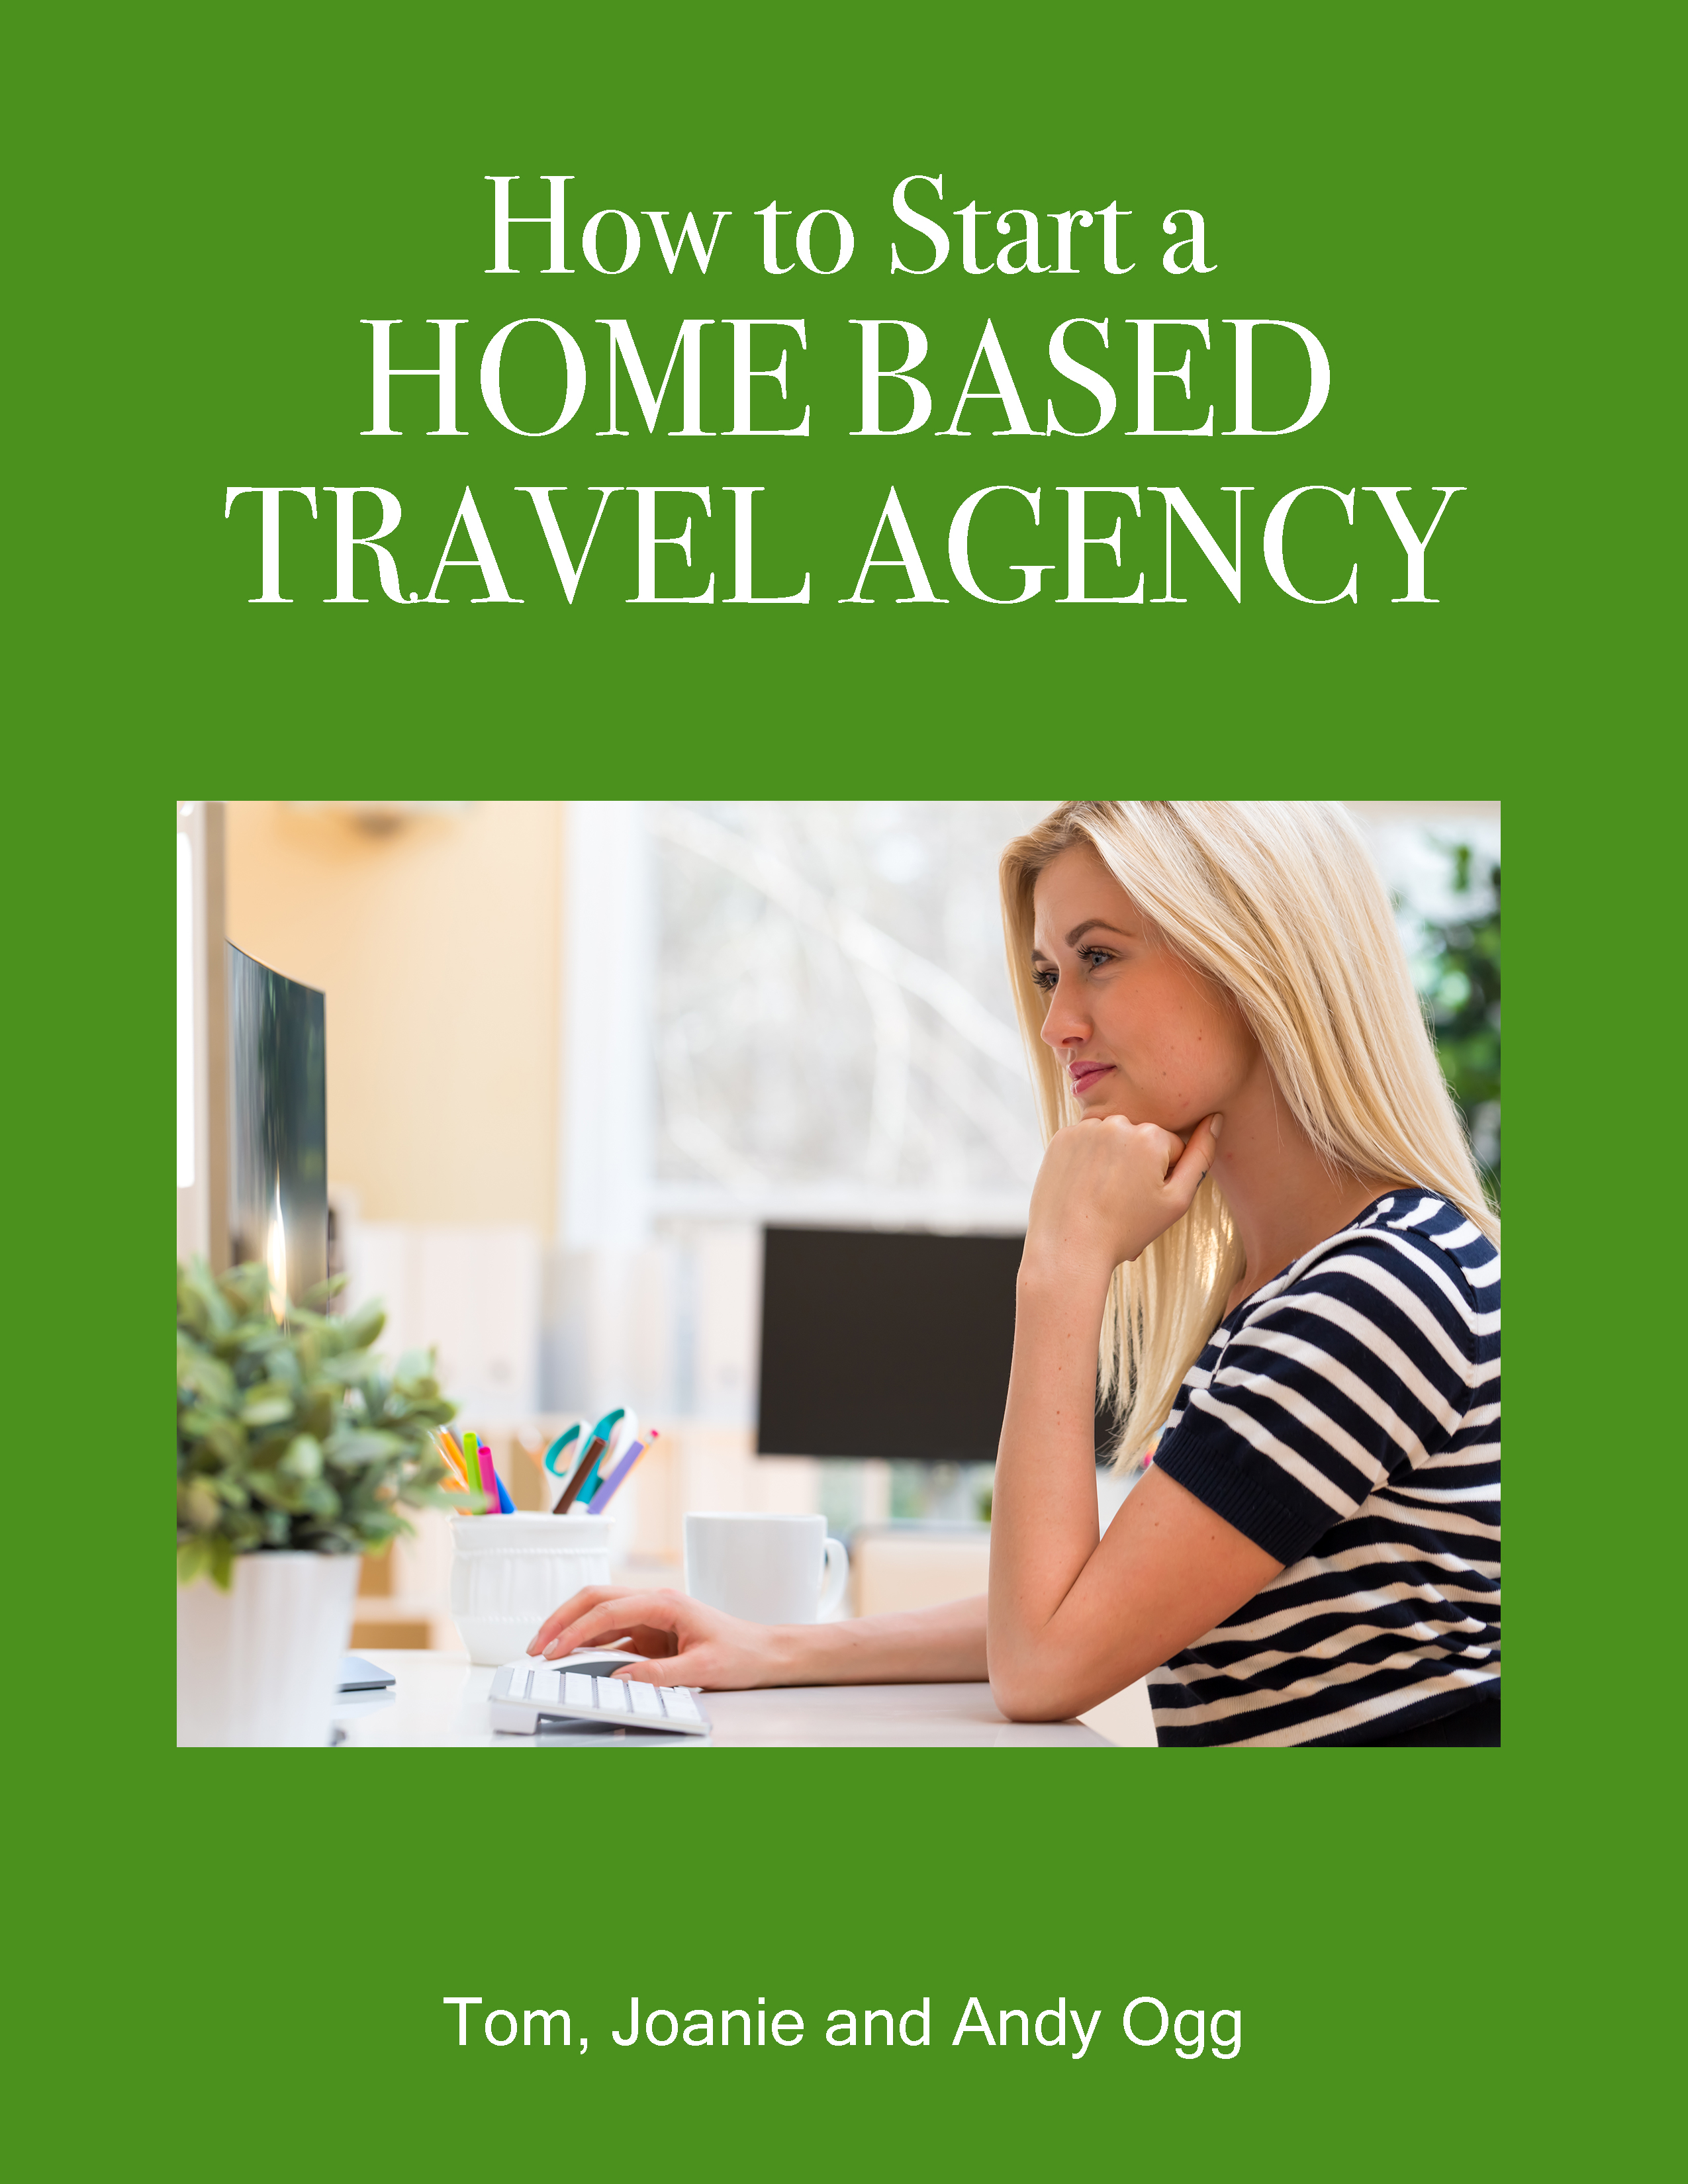 travel agency home based